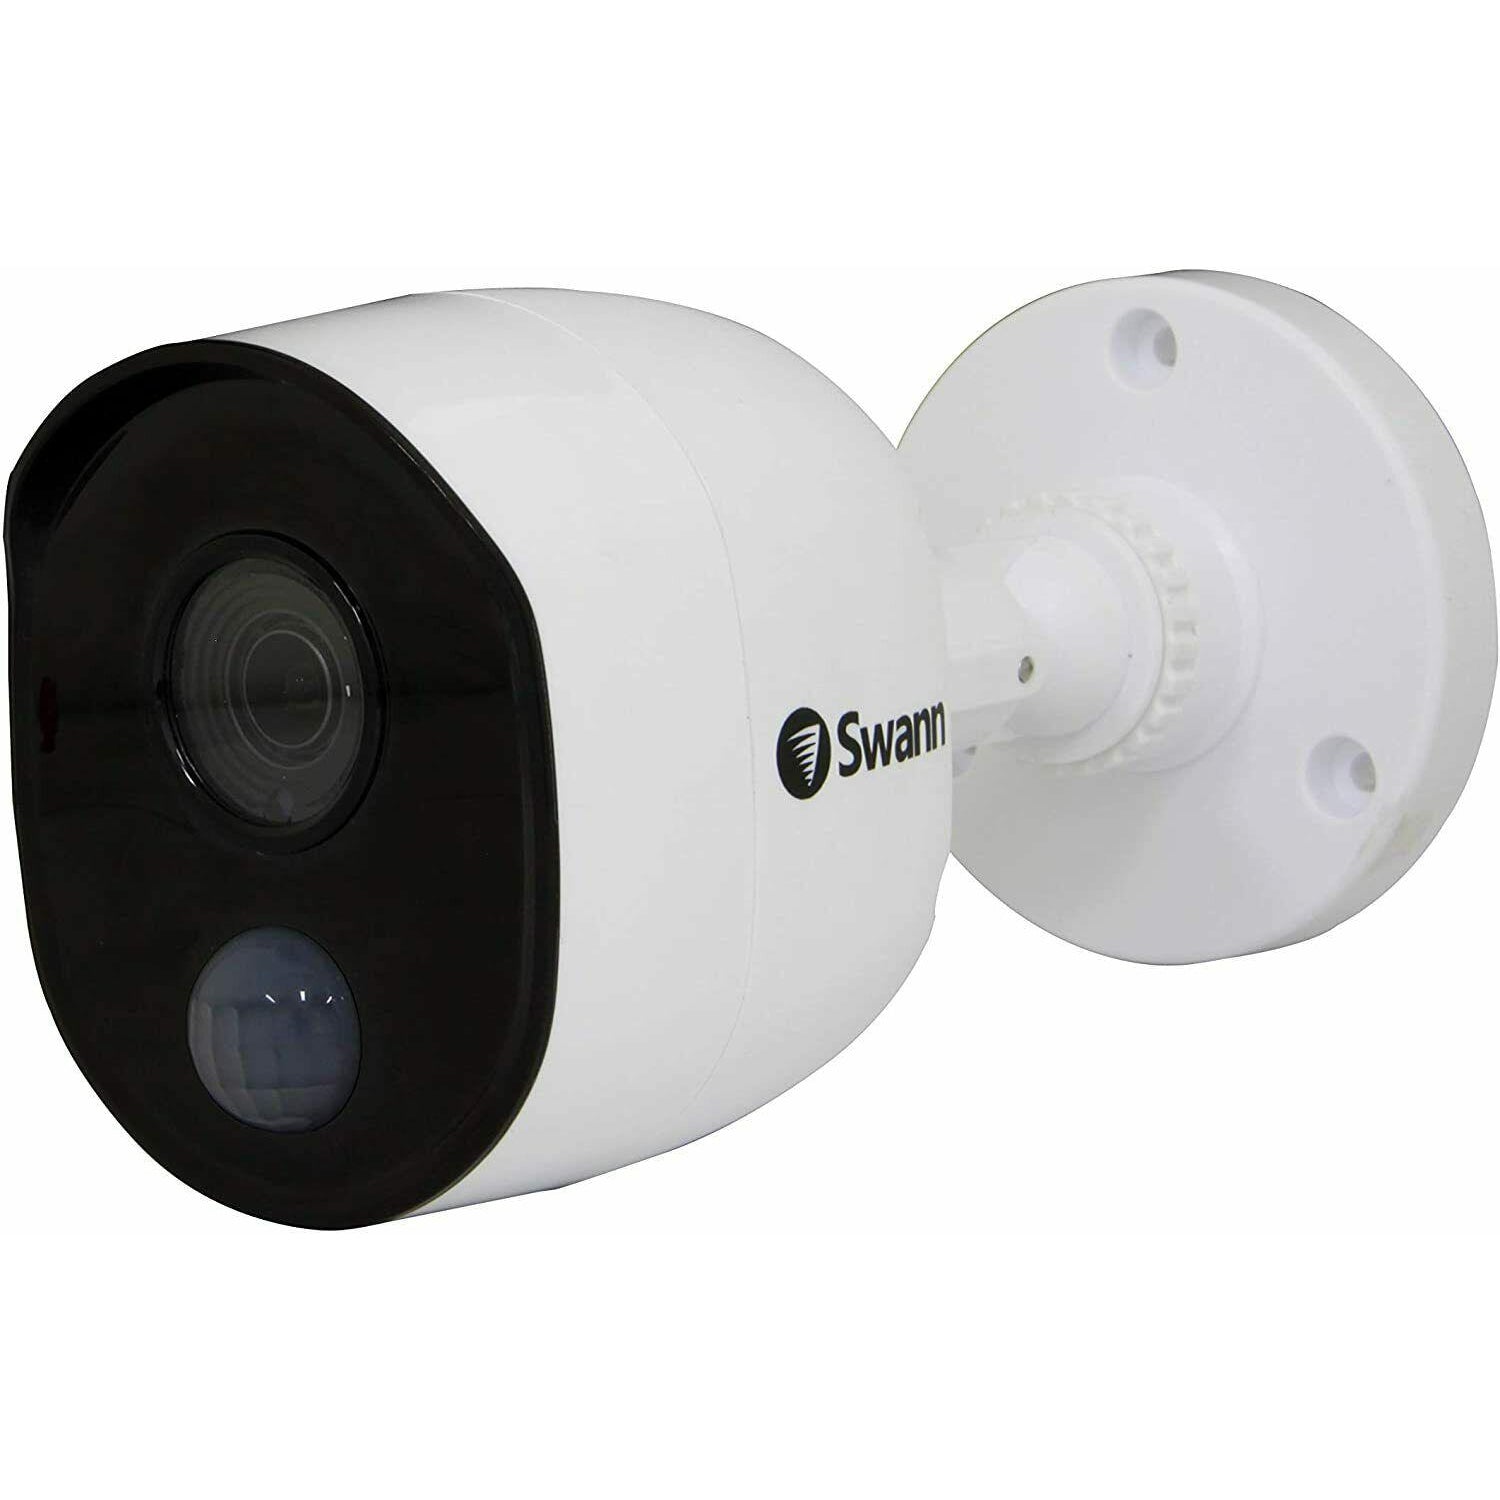 Swann 1080p Full HD Outdoor Thermal Sensing Bullet Security Cameras